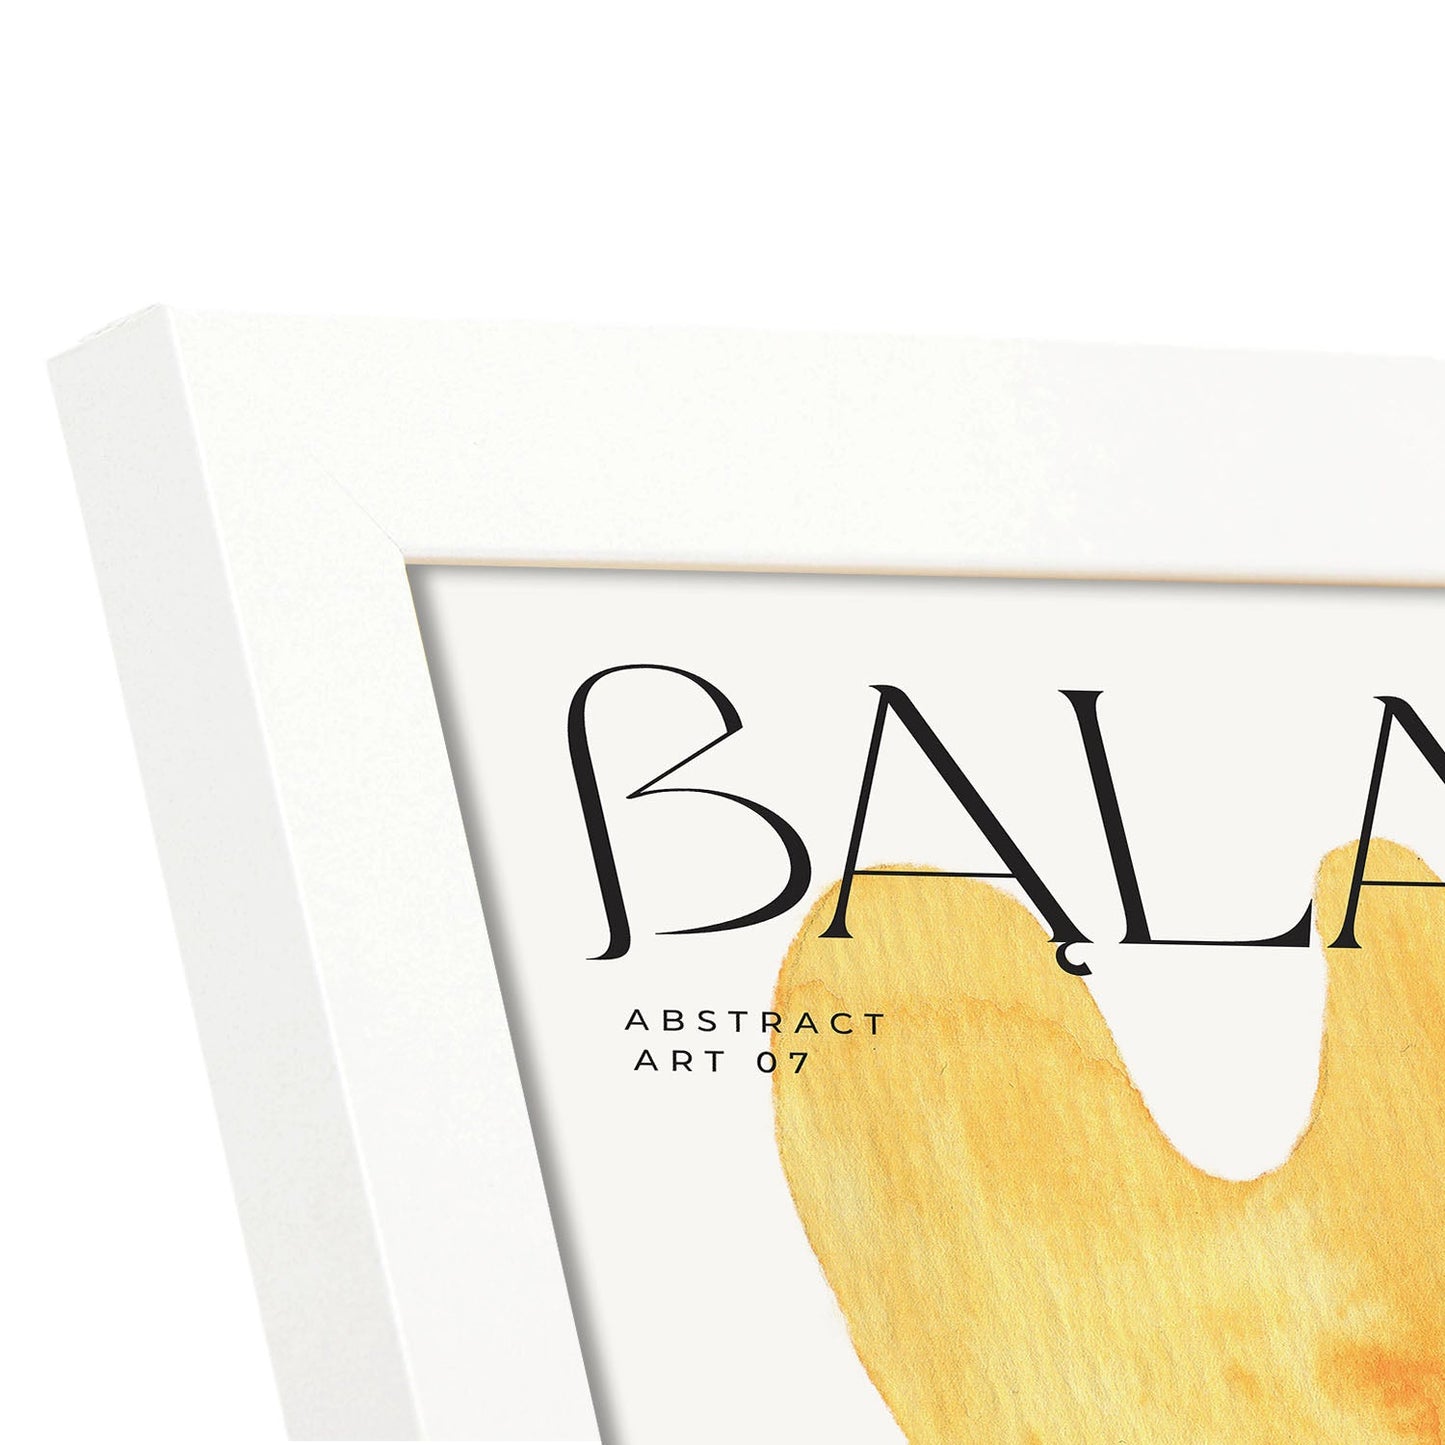 Balance-Artwork-Nacnic-Nacnic Estudio SL